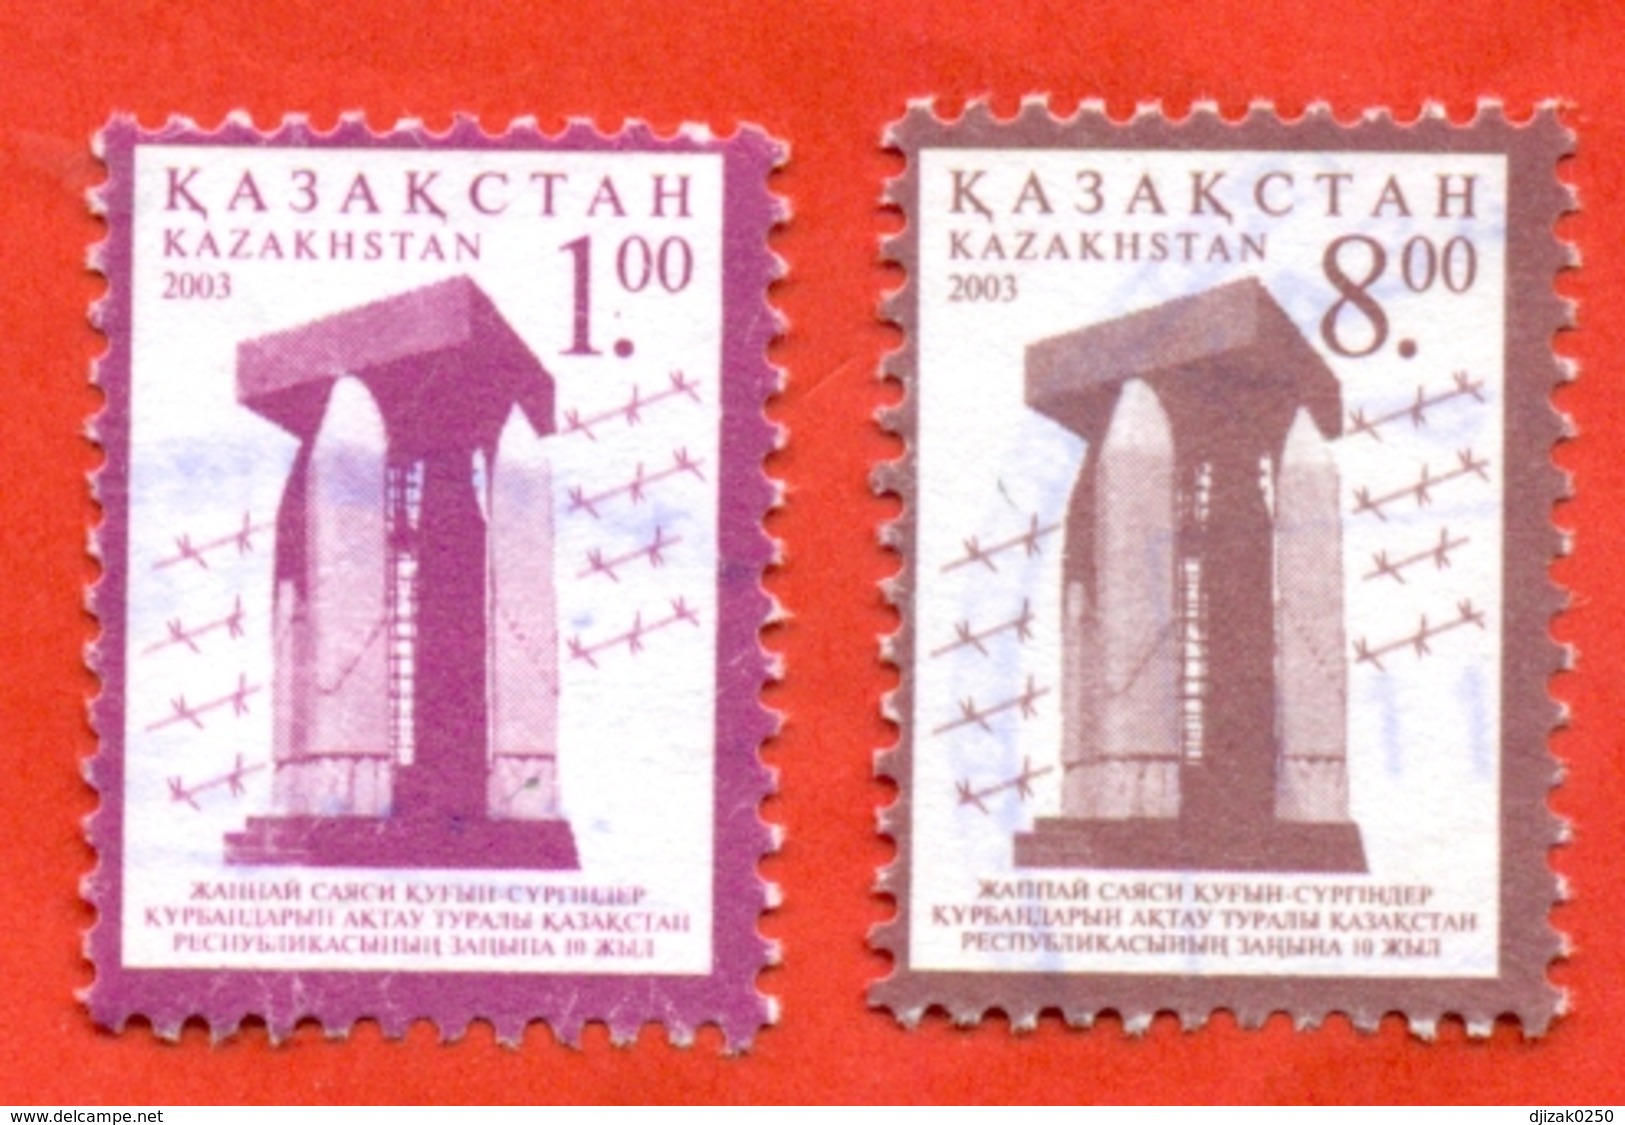 Kazakhstan 2003. Monument. Used Stamps. - Kazakhstan